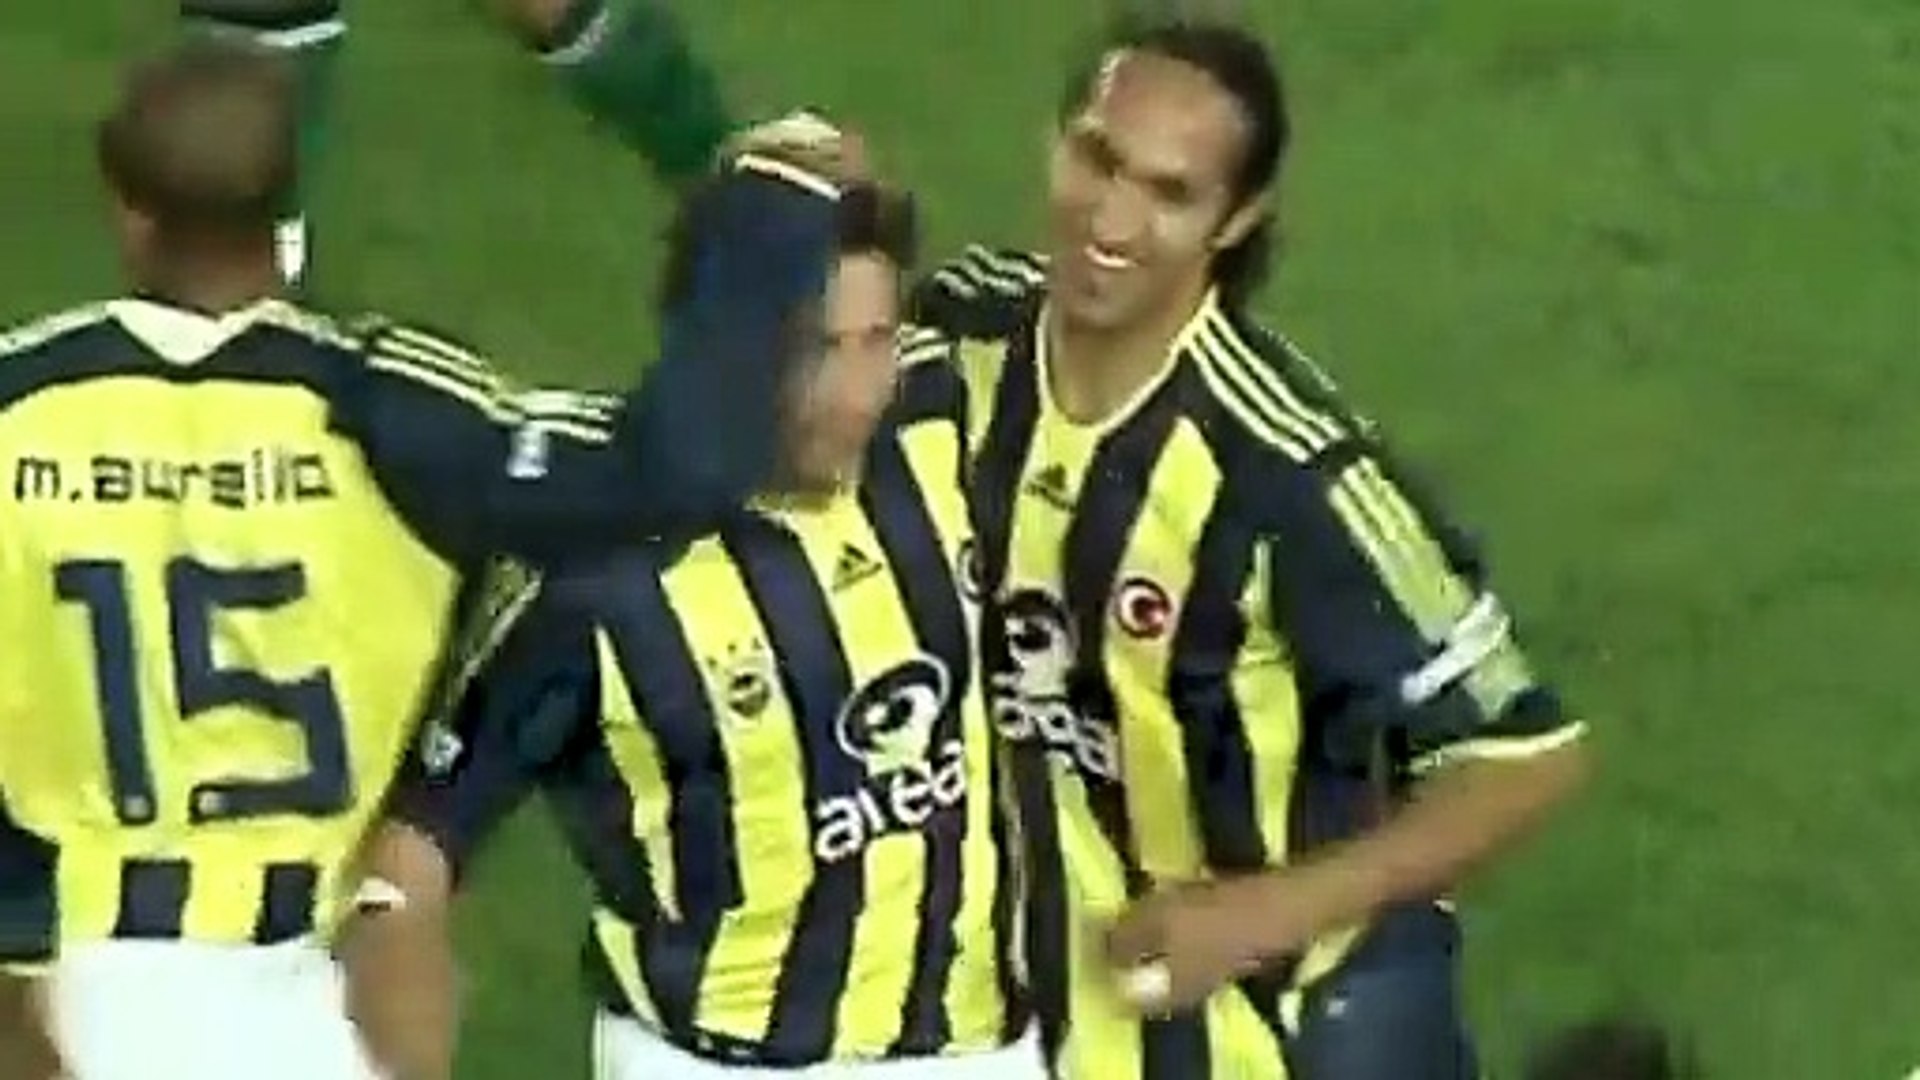 Fenerbahçe 3-0 Denizlispor 18.04.2006 - 2005-2006 Turkish Cup Semi Final  2nd Leg (1st, 2nd Goals) - Dailymotion Video